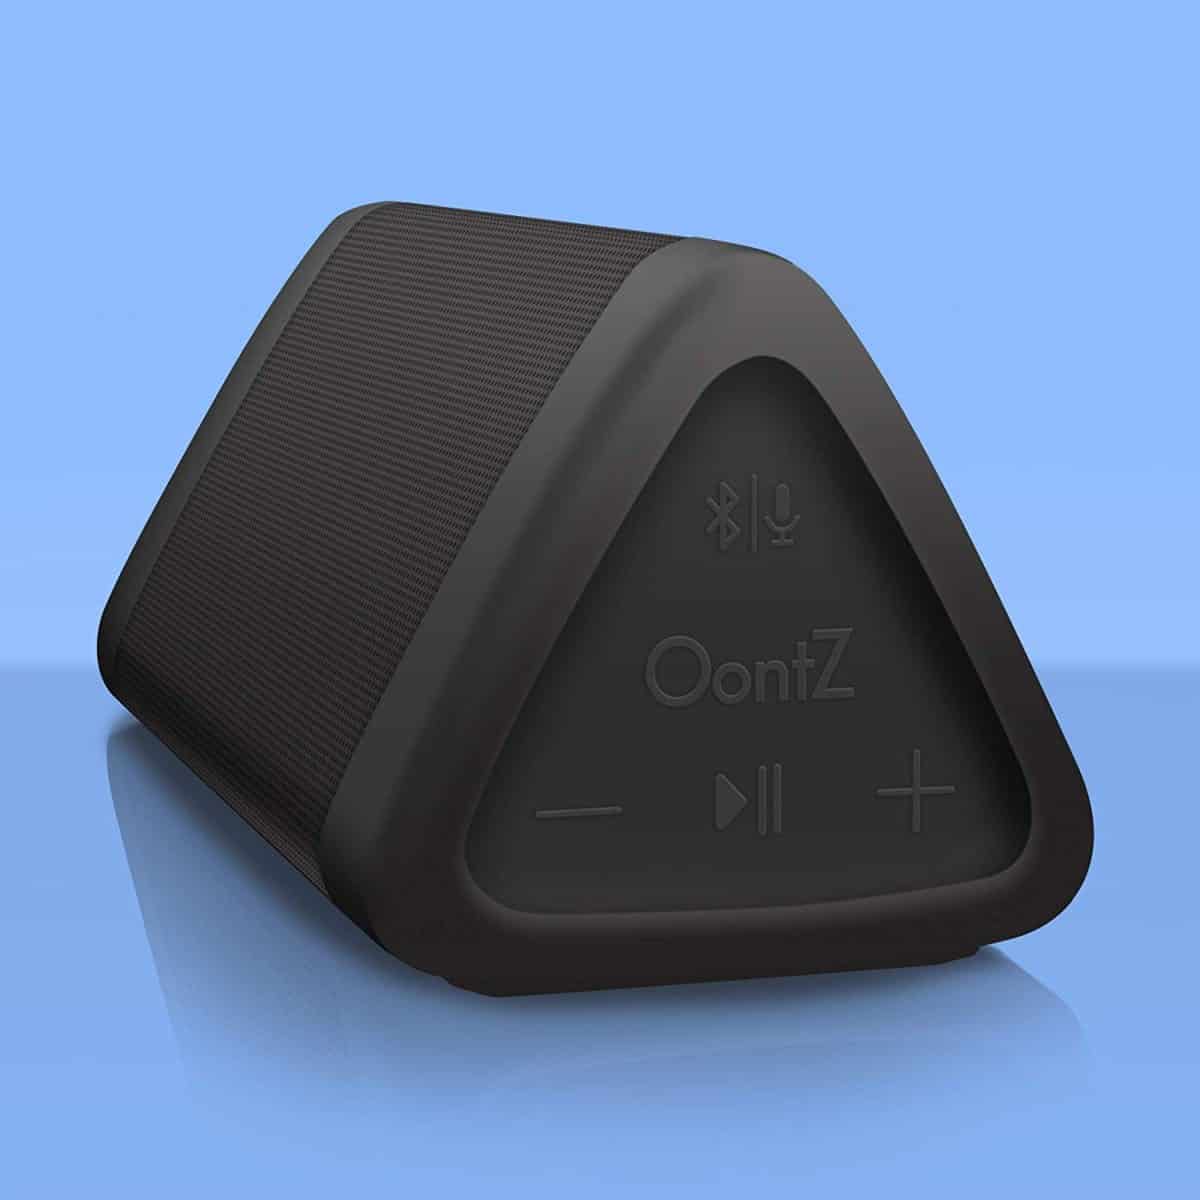 OontZ Angle 3 Portable Bluetooth Speaker | Essential iPad Accessories